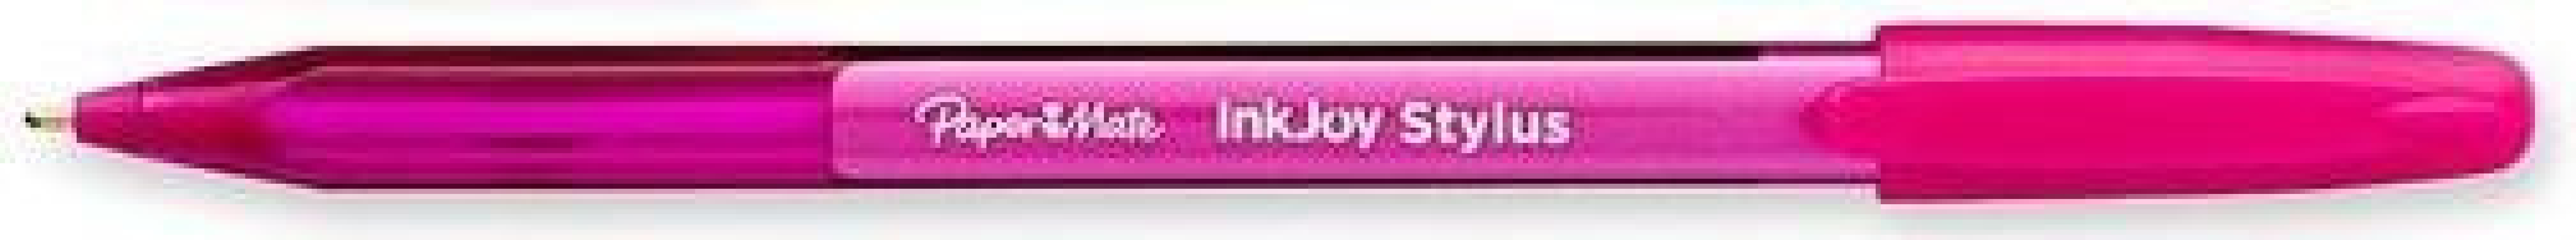 Inkjoy Stylus Digital Pen Pink Paper Mate